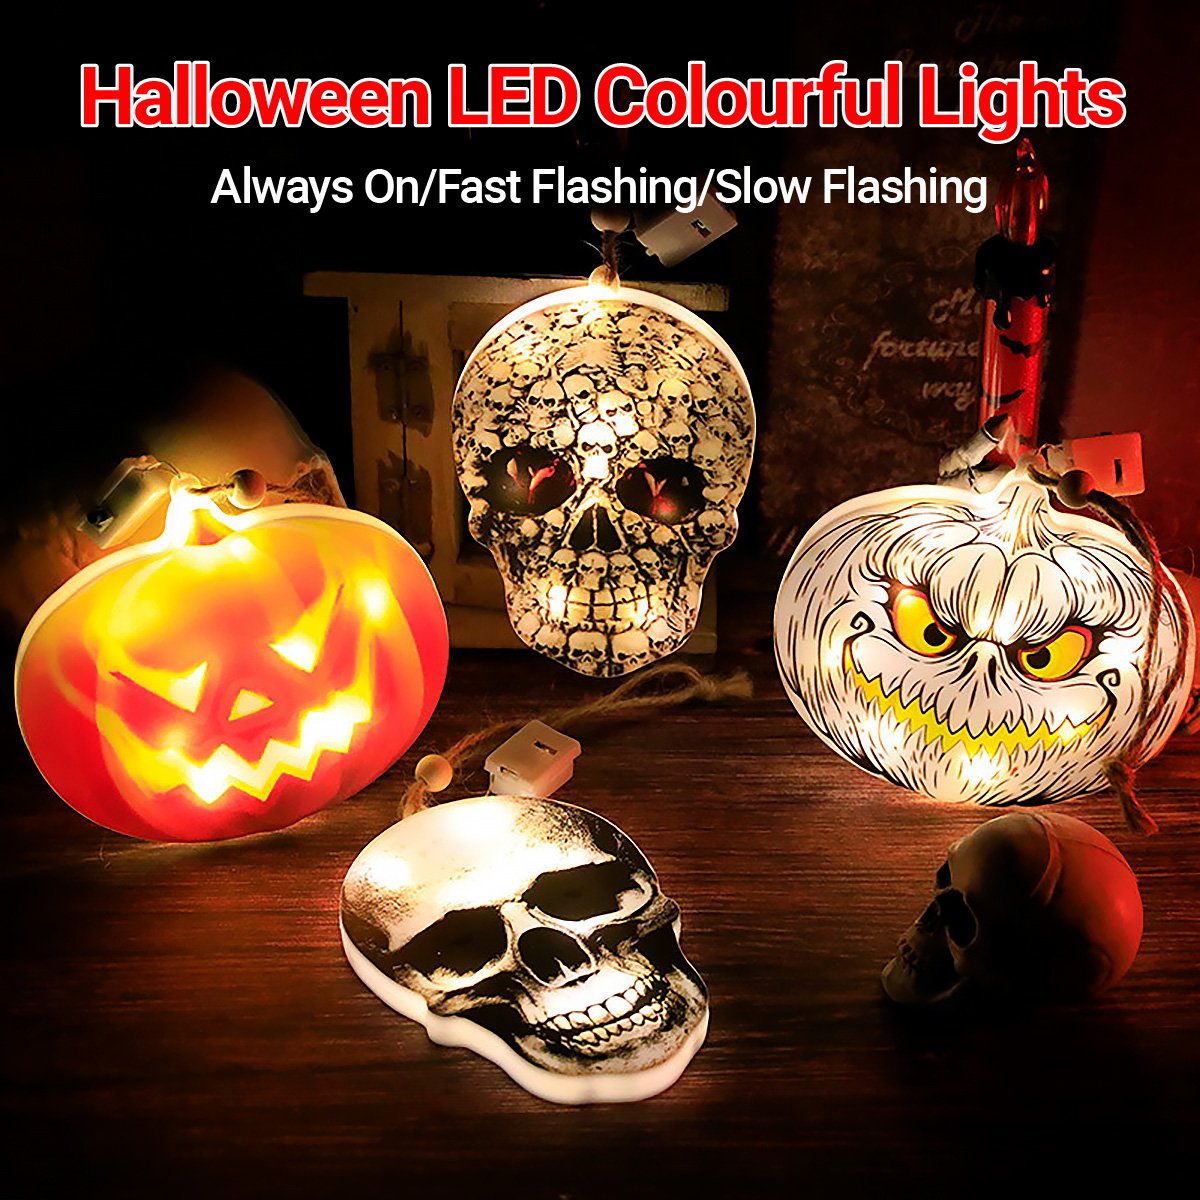 Halloween LED Colorful Lights